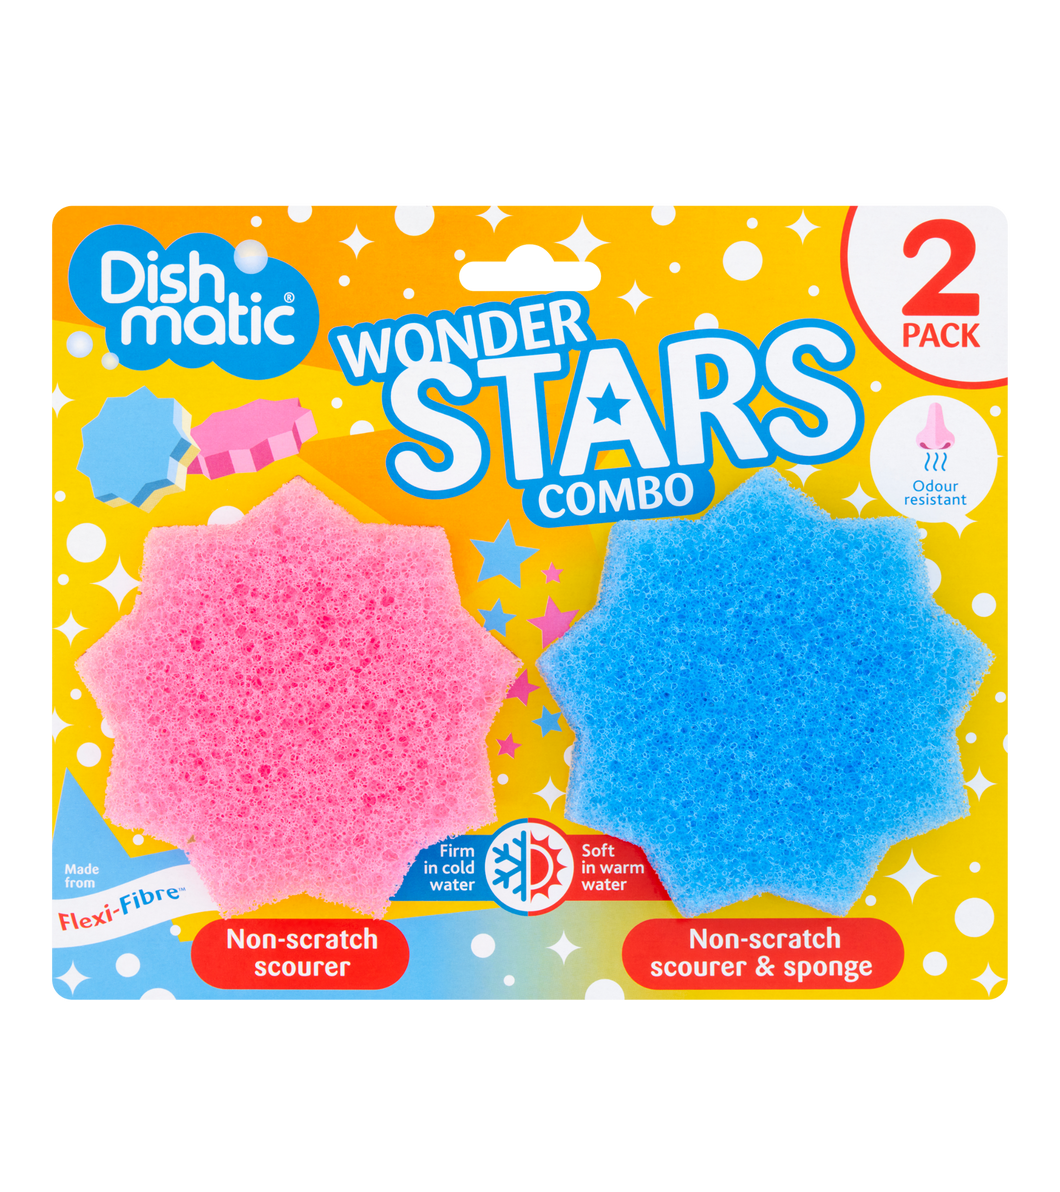 Dishmatic Wonder Stars Combo 2 Pack